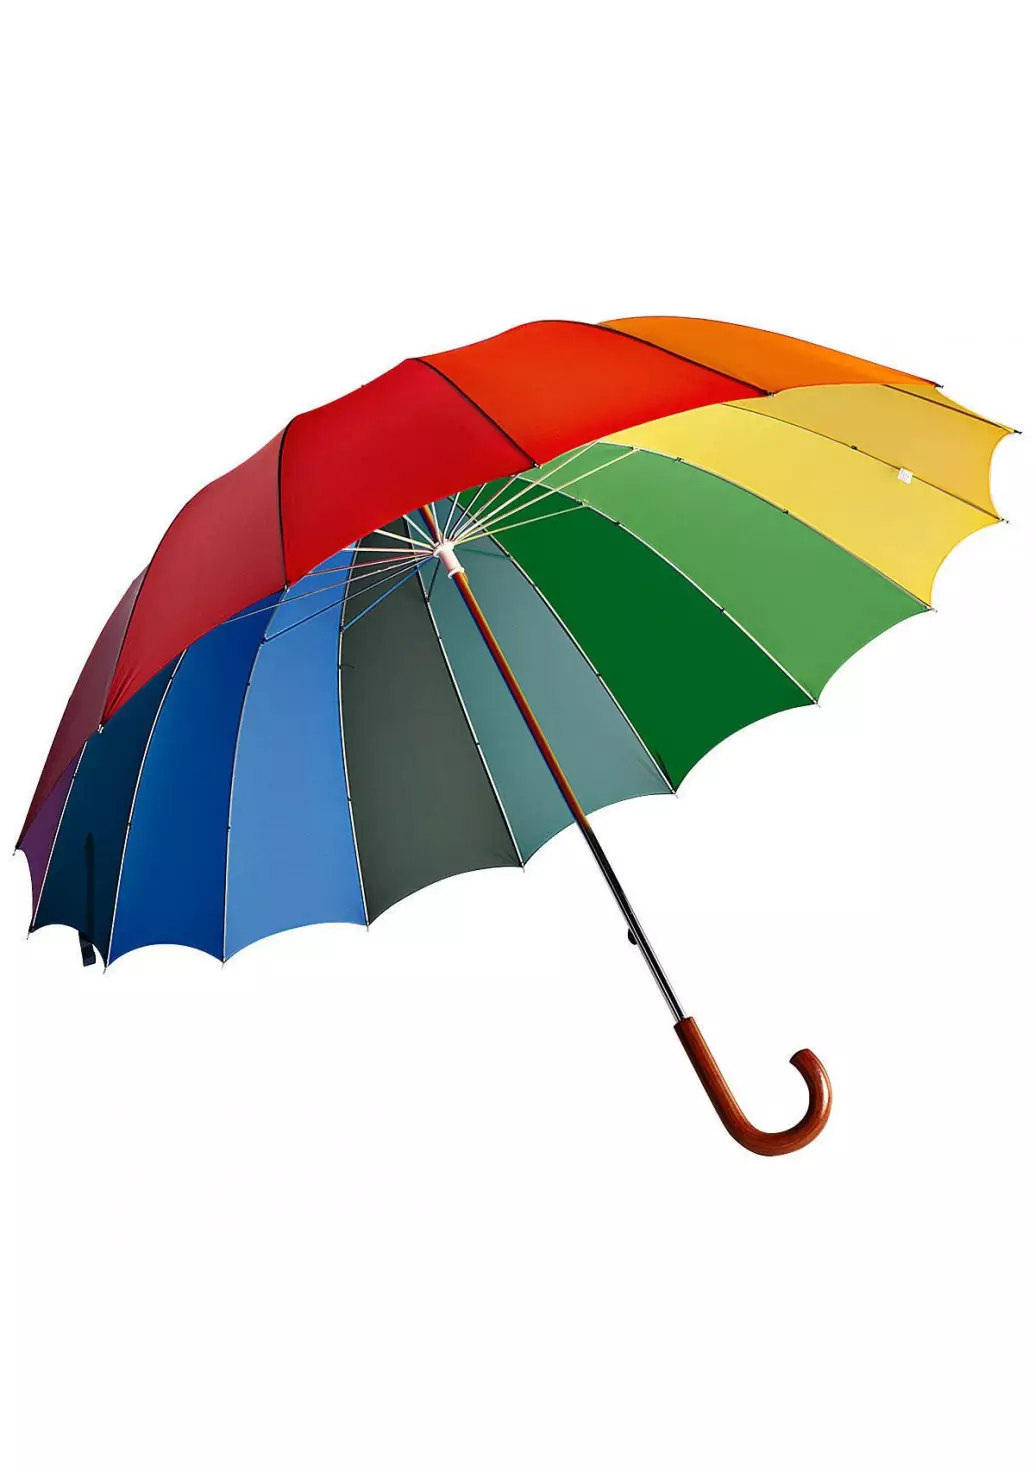 Rainbow payung (50 foto): Tebu warna-warni dan mengubah warna lipat payung-rainbow 15239_2